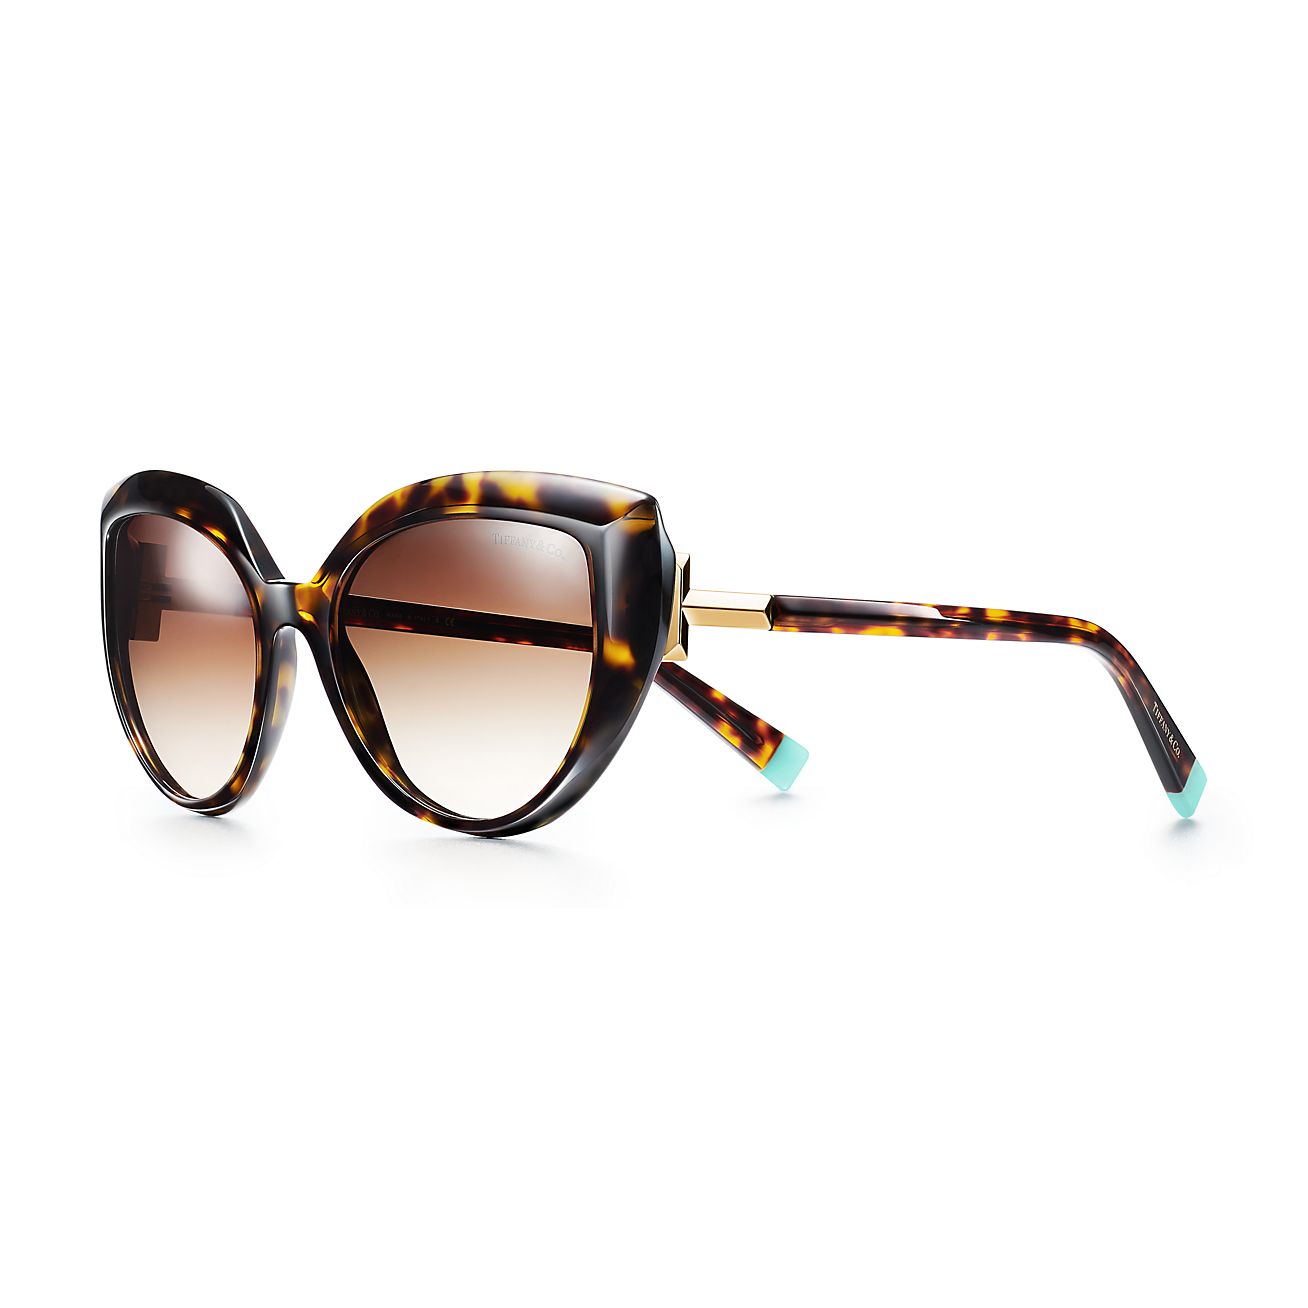 Tiffany T cat eye sunglasses with 